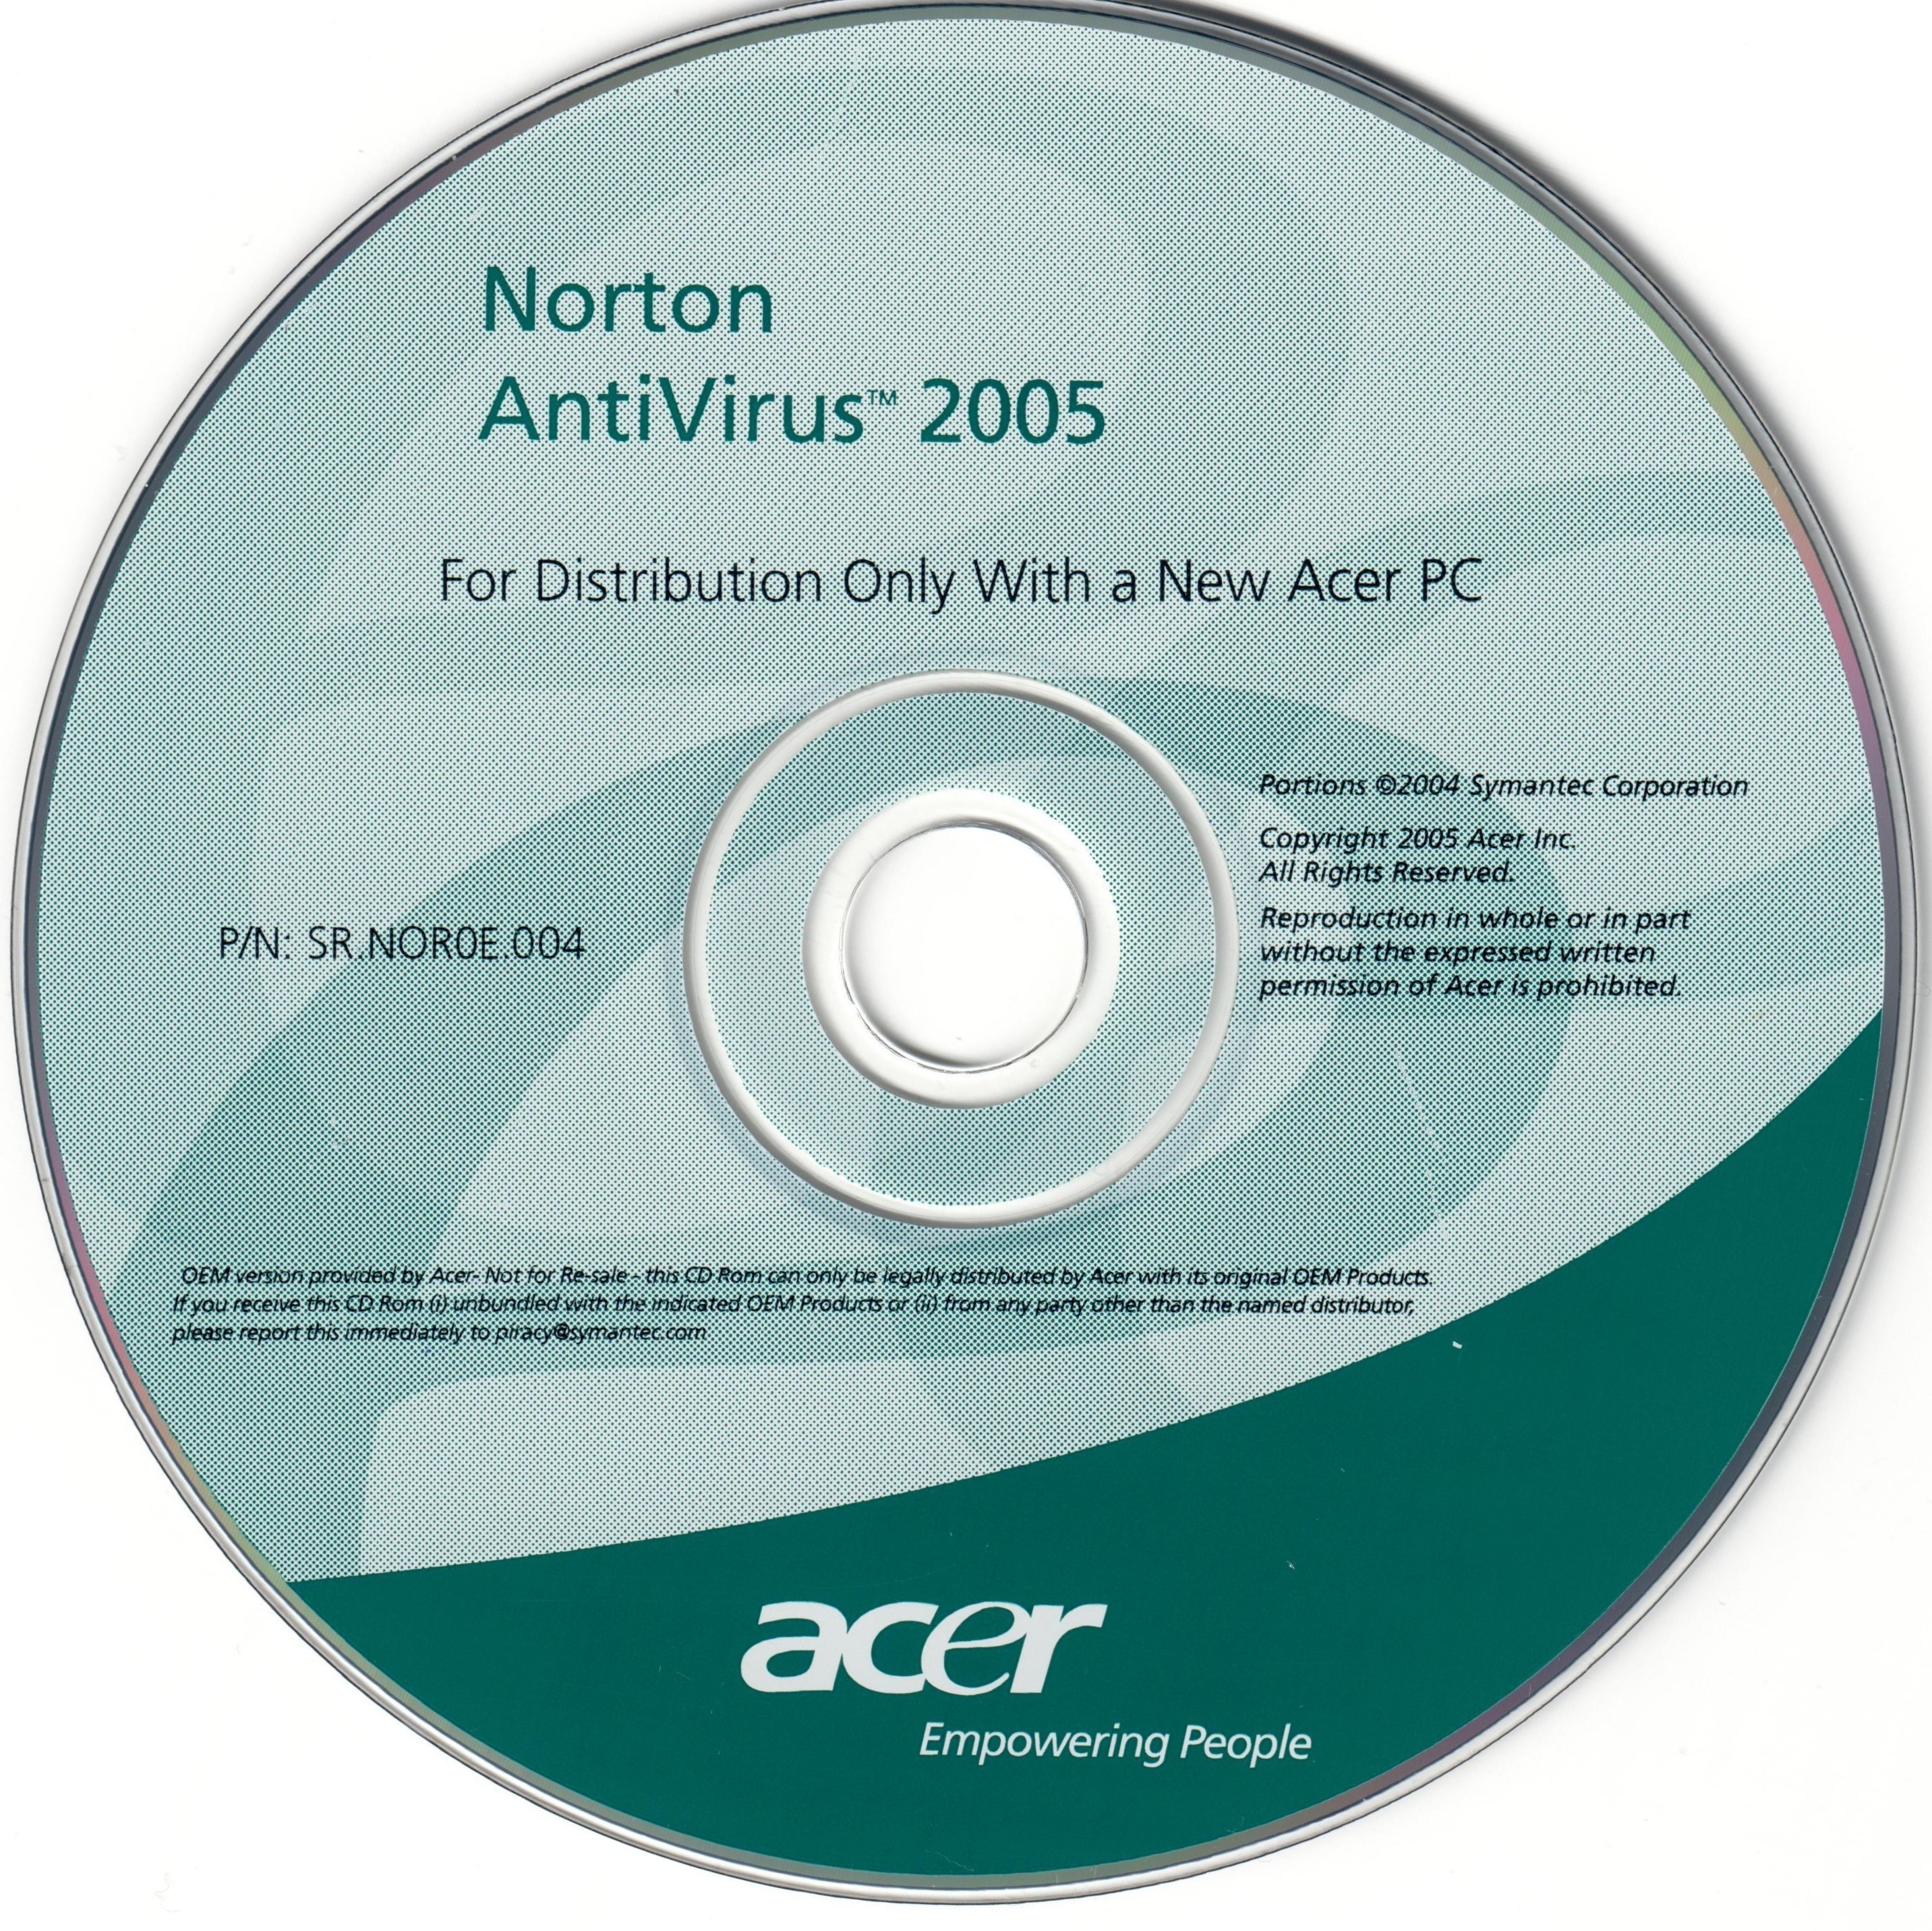 gratis norton anti virus 2005 full version